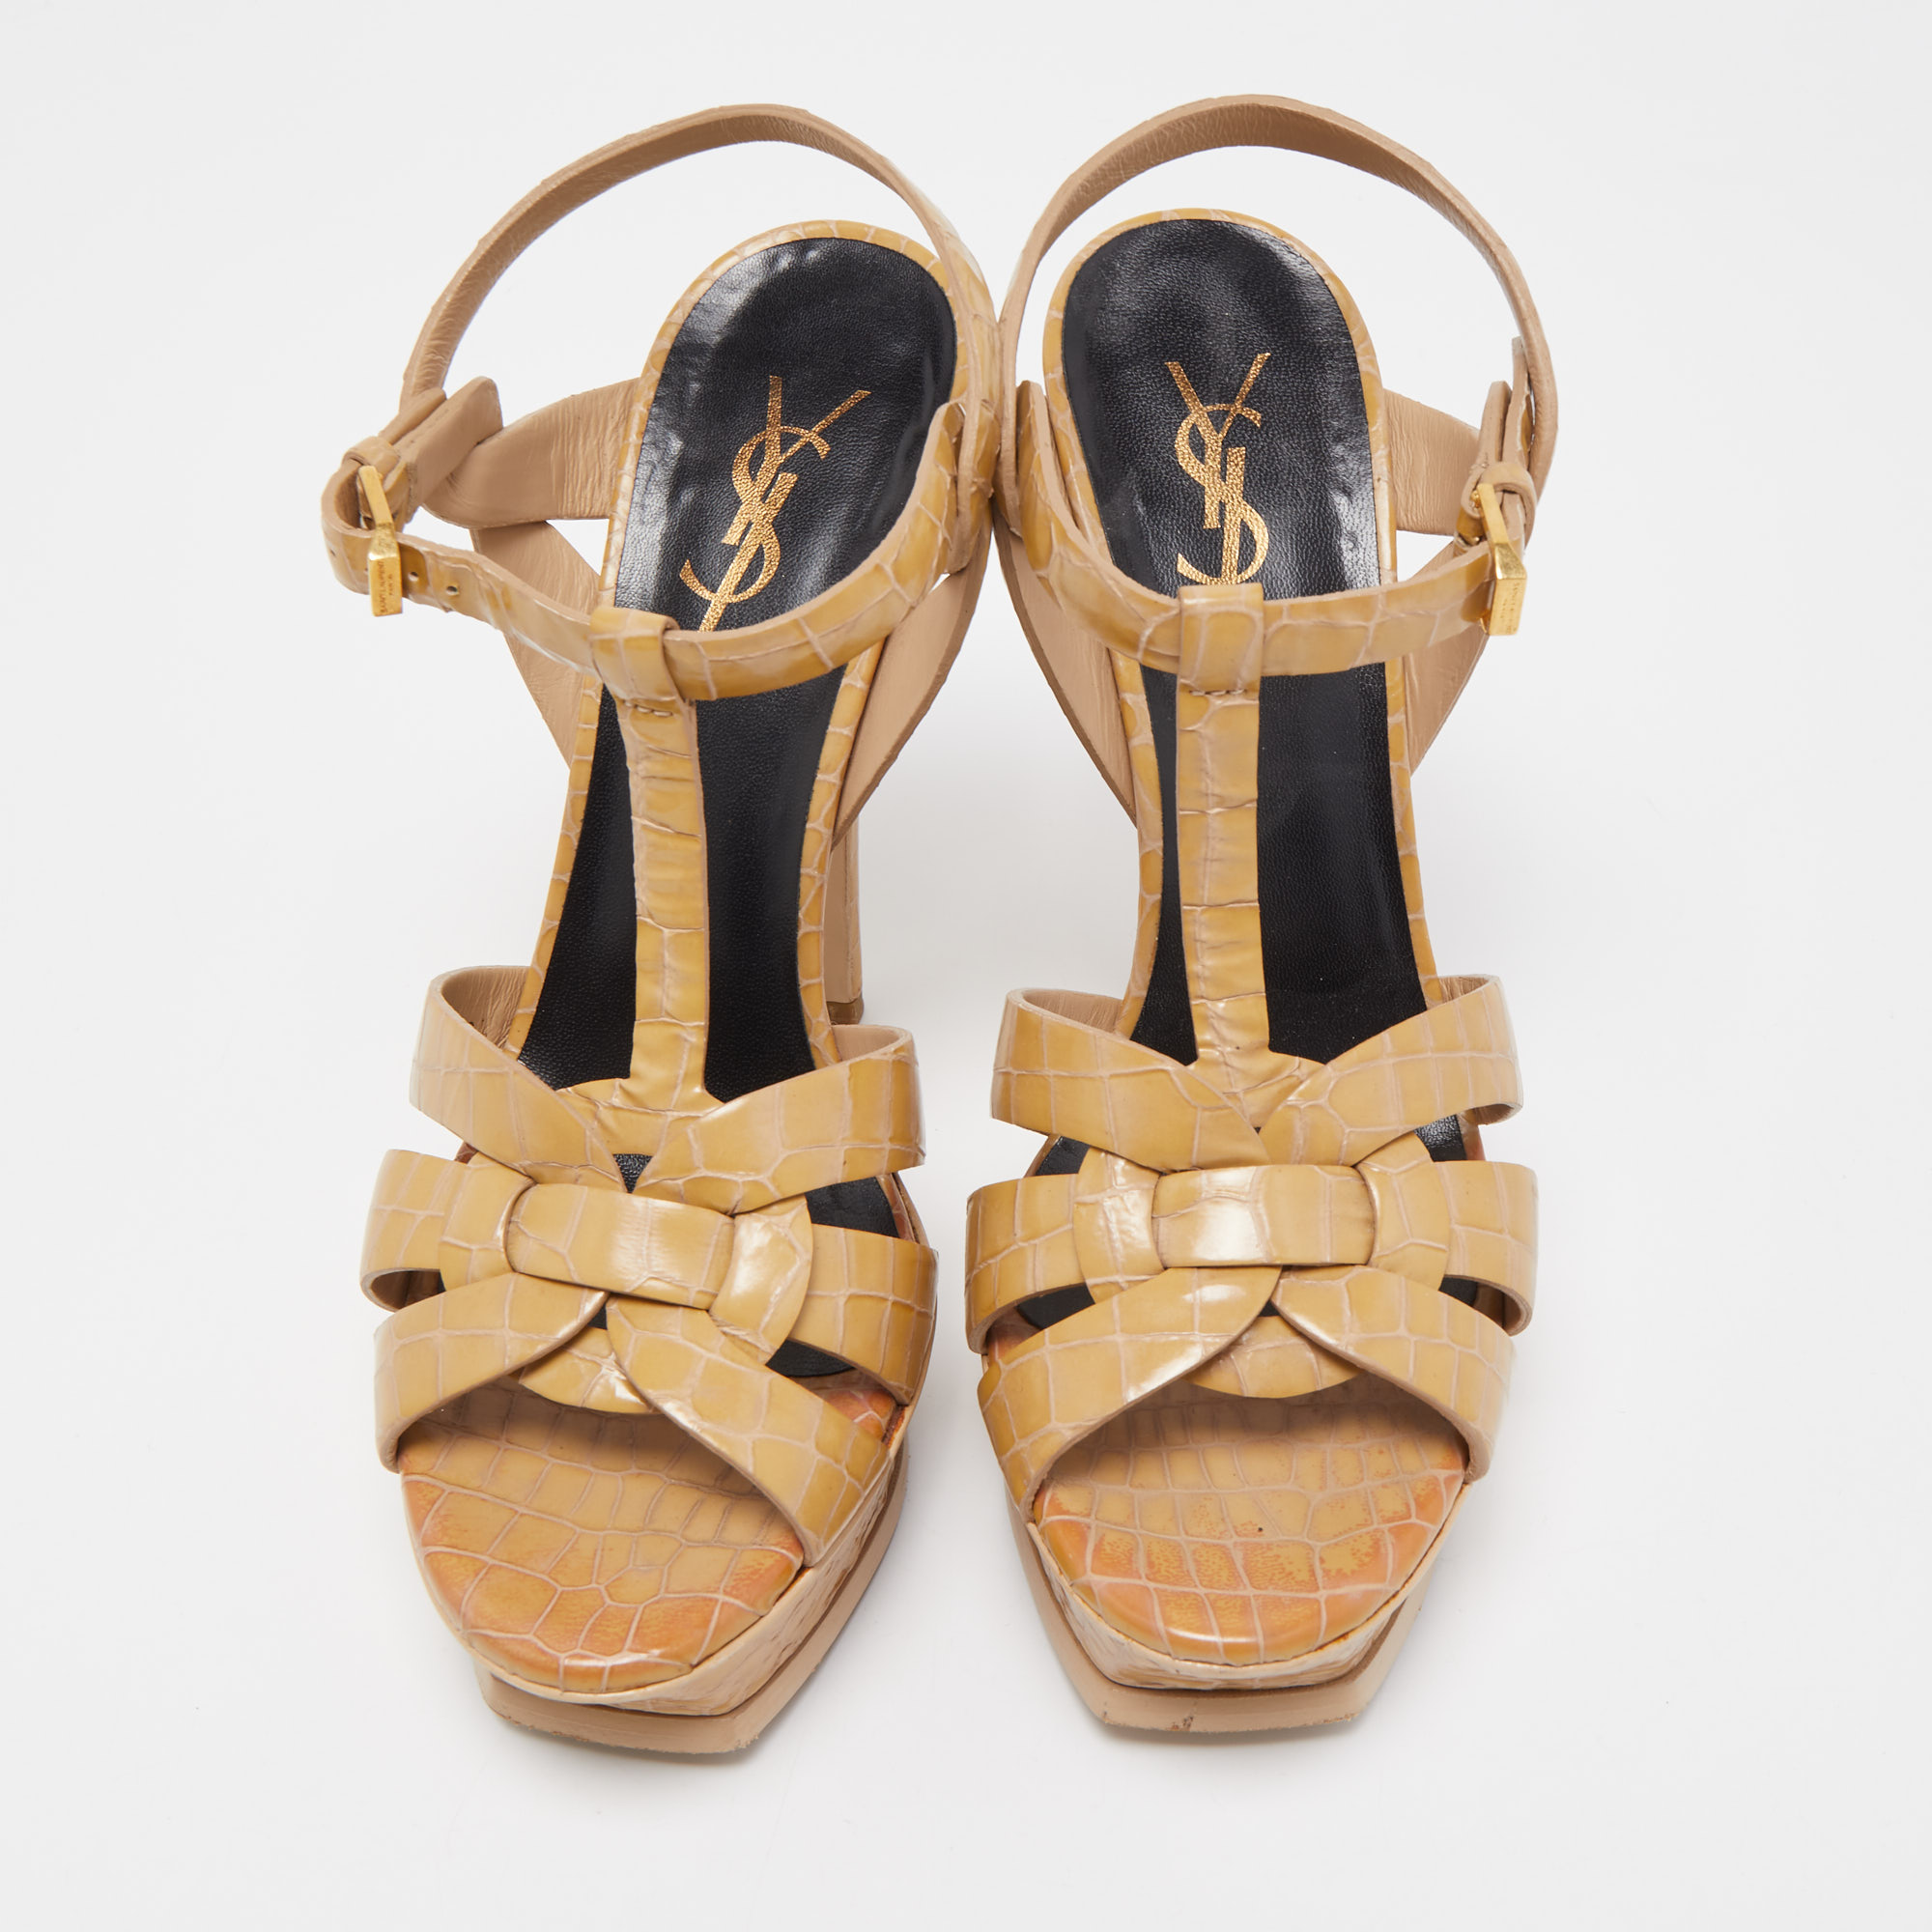 Saint Laurent Beige Croc Embossed Leather Tribute Ankle Strap Sandals Size 38.5